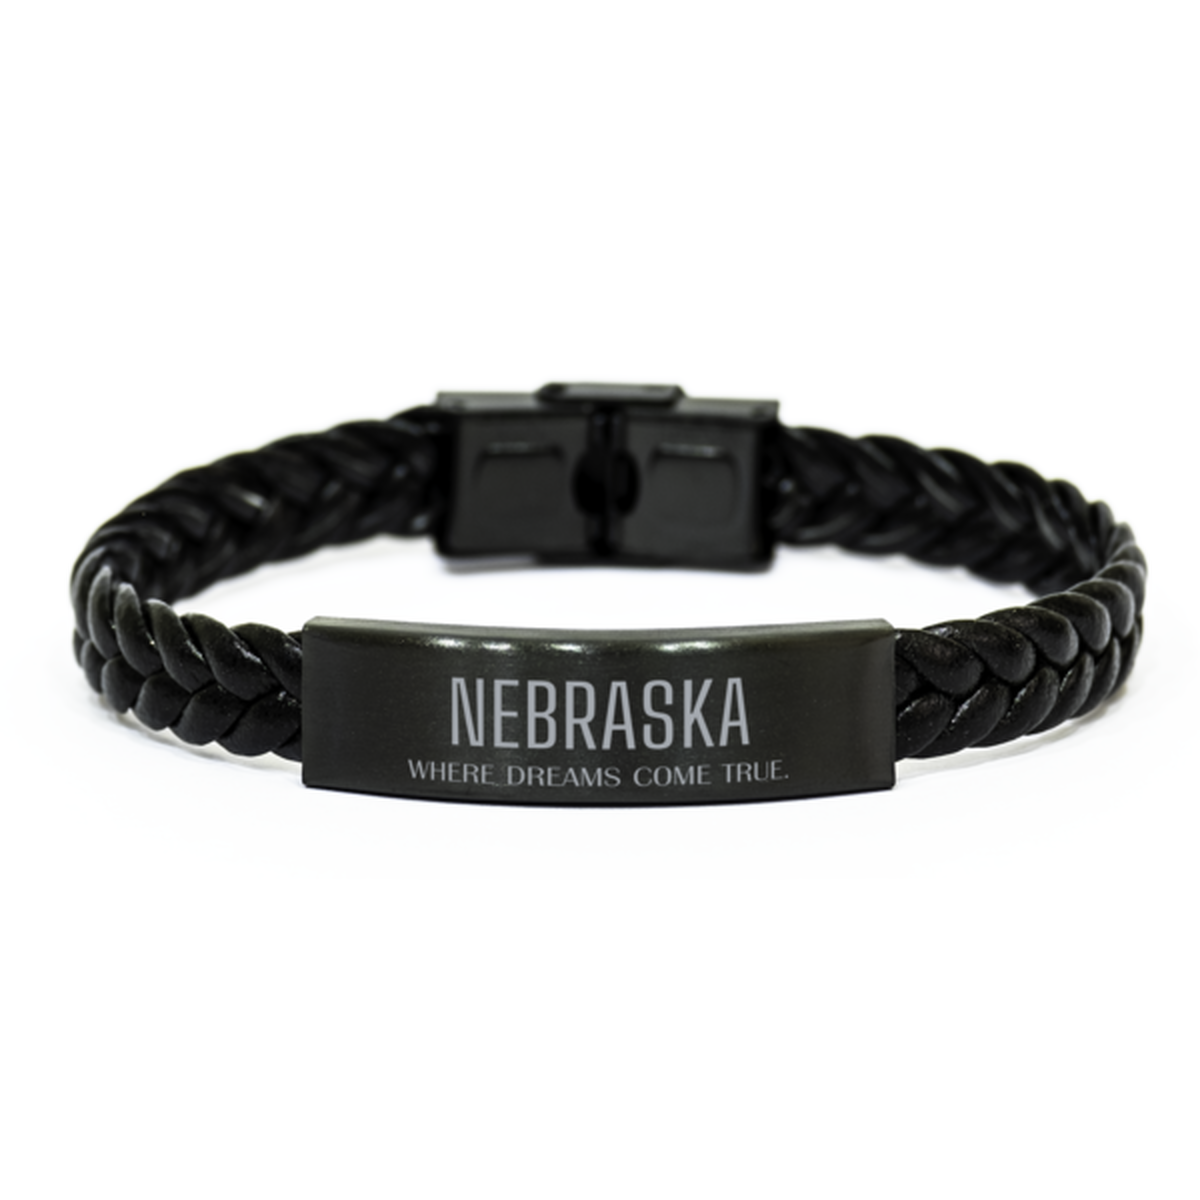 Love Nebraska State Braided Leather Bracelet, Nebraska Where dreams come true, Birthday Inspirational Gifts For Nebraska Men, Women, Friends